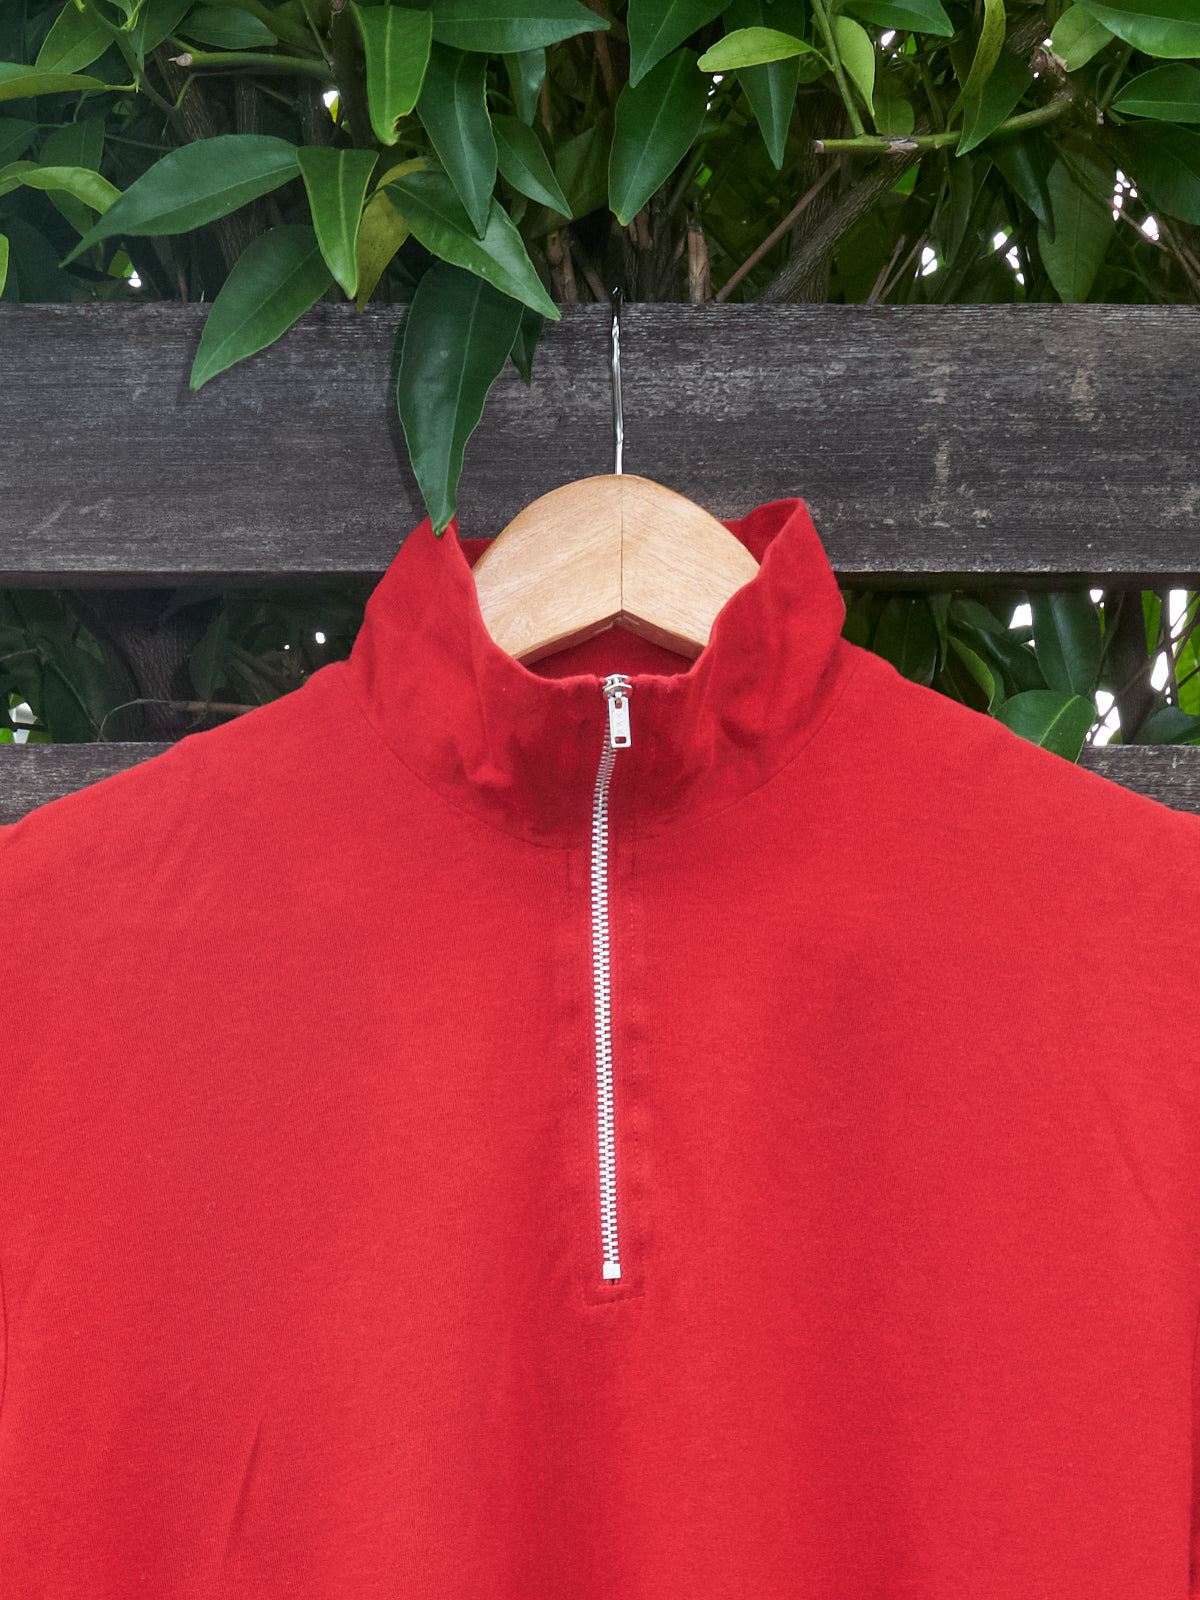 Y's for Men Yohji Yamamoto SS2001 red cotton zipped neck polo shirt - mens S M